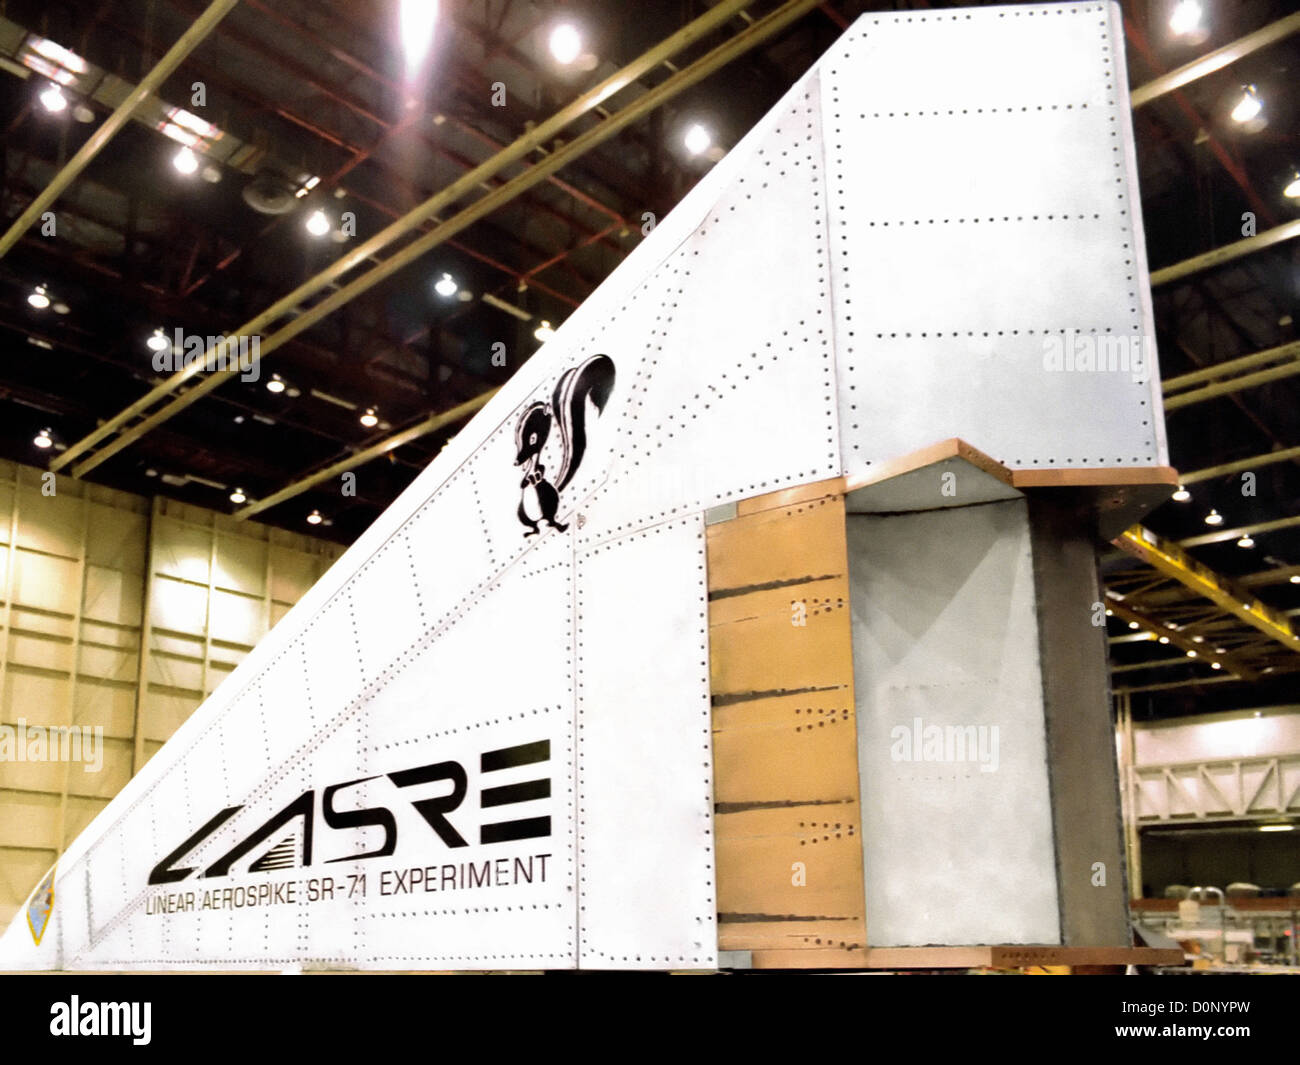 Linear Aerospike SR-71 Experiment (LASRE) Stockfoto